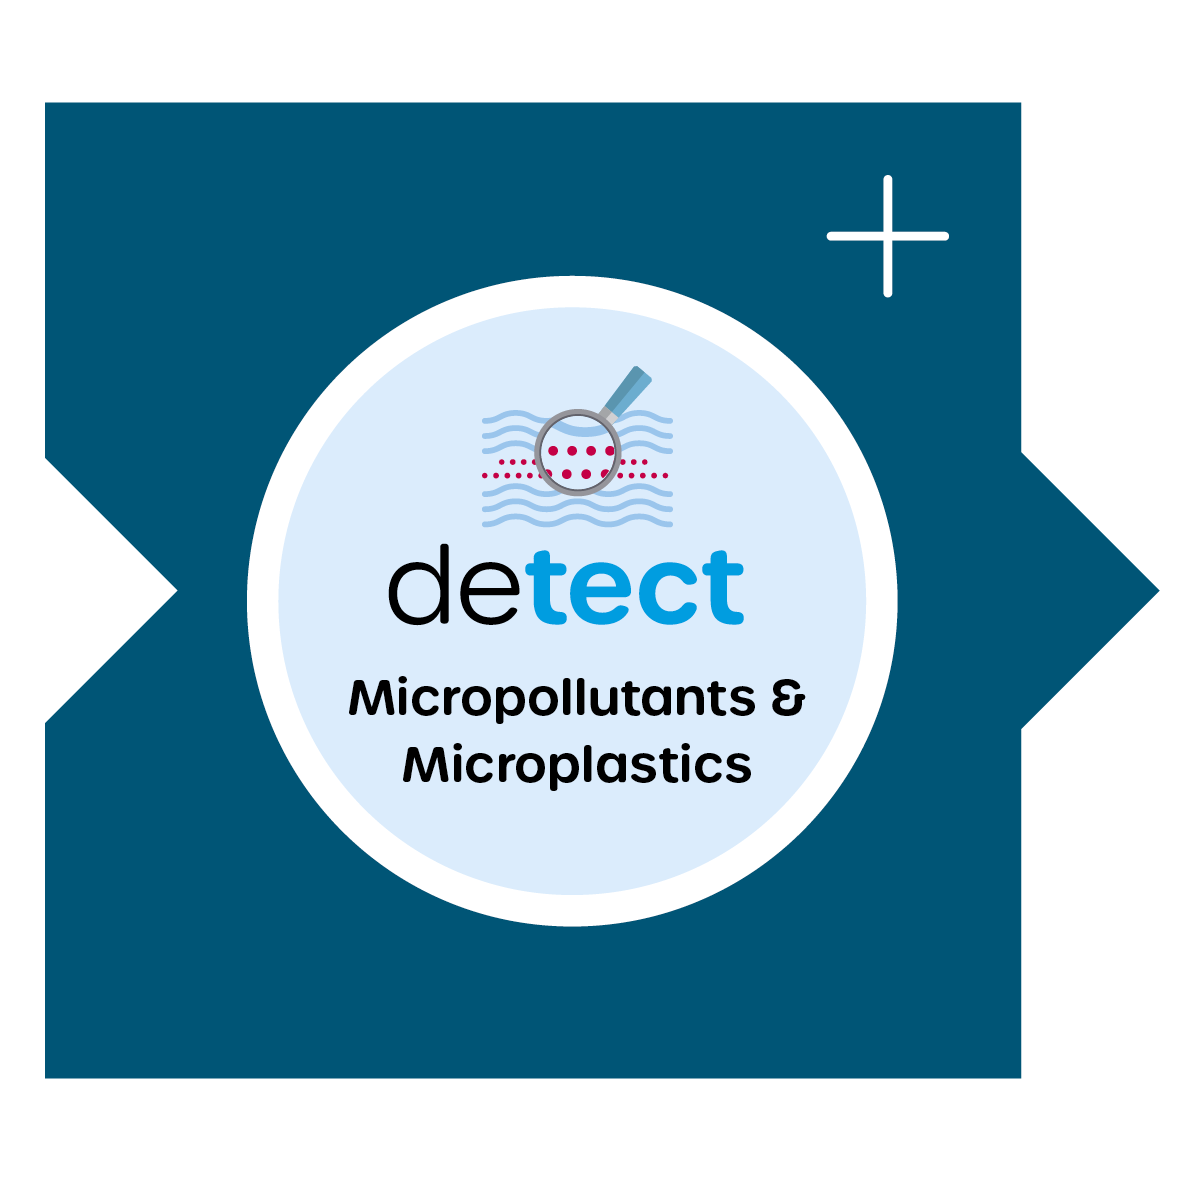 detect Mikroschadstoffe und Mikroplastik / micropollutants and micrpplastics